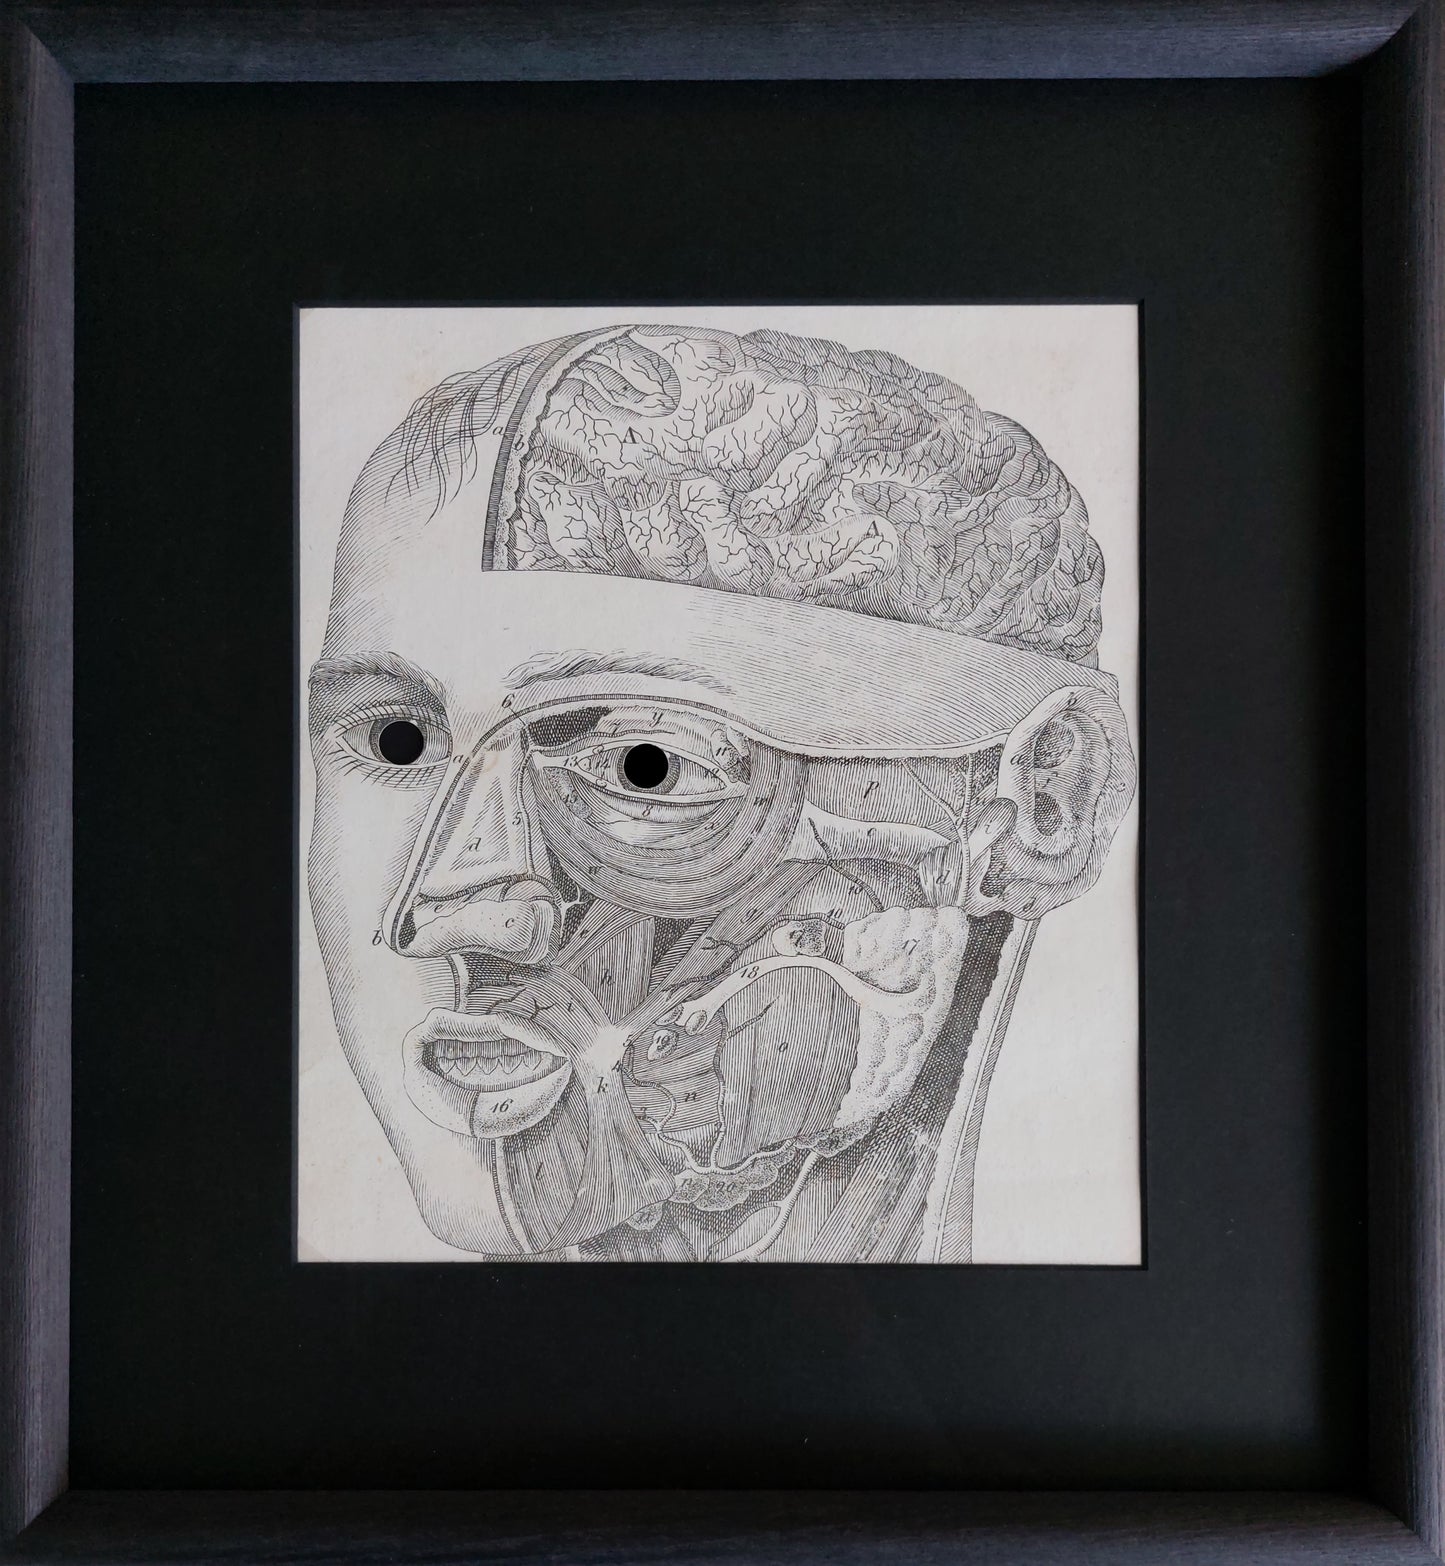 Jurgis Mačiūnas | Face Anatomy Mask, c. 1973 | Offset lithography on paper, 24.8x21.6 (38.3x35.3)